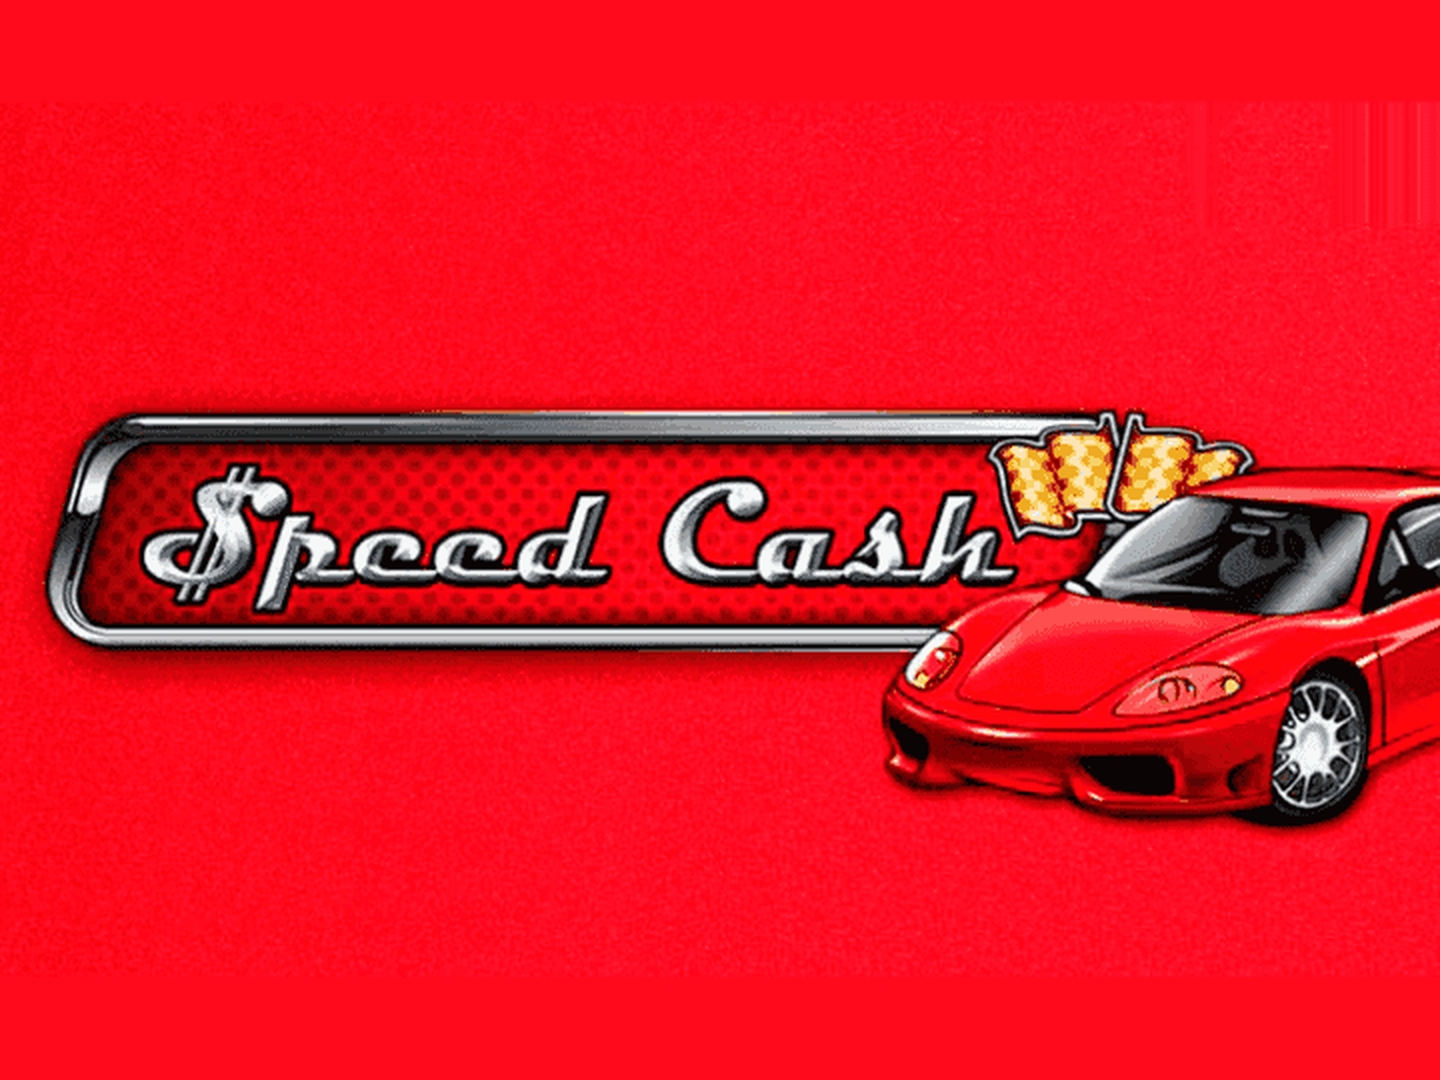 Speed n cash 1win стратегия. Speed Cash. Speed Cash 1win. Speed & Cash logo. Speed and Cash тактика.